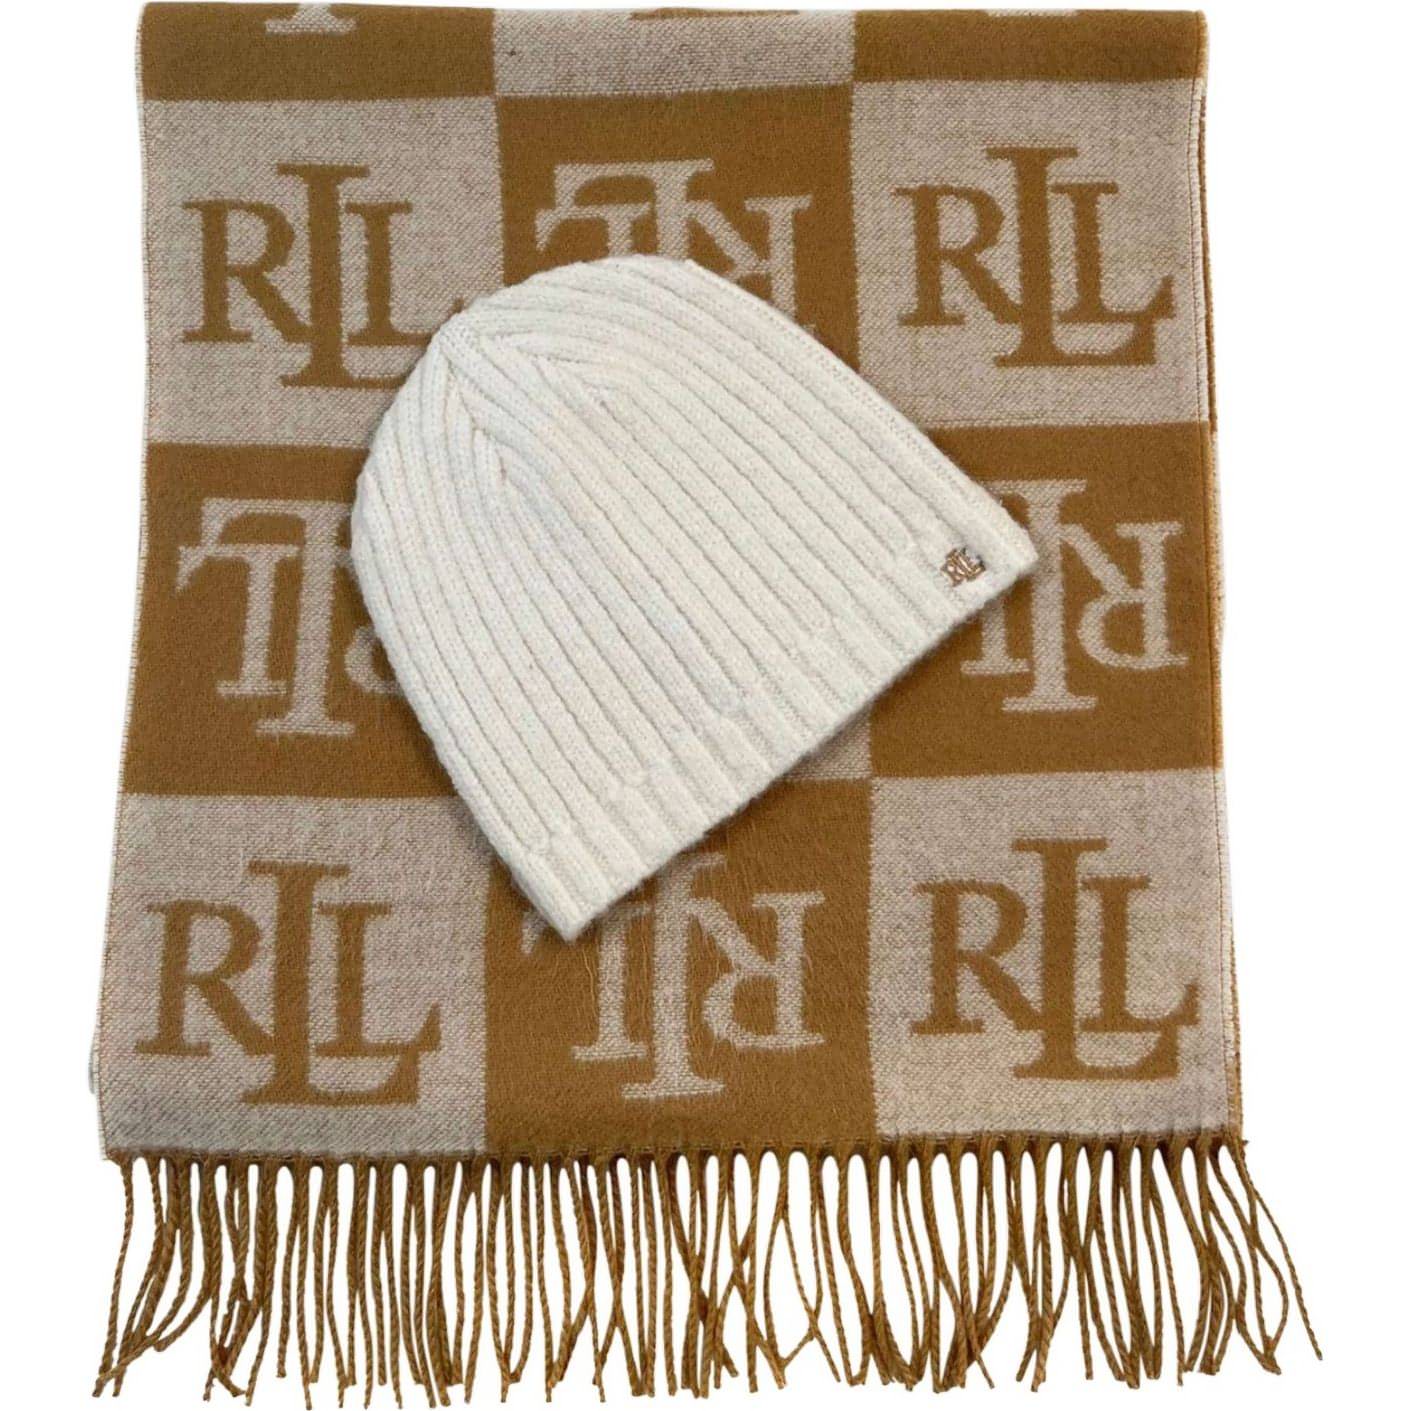 LAUREN RALPH LAUREN moteriškas šviesus šalikas su kepure Logo g set scarf